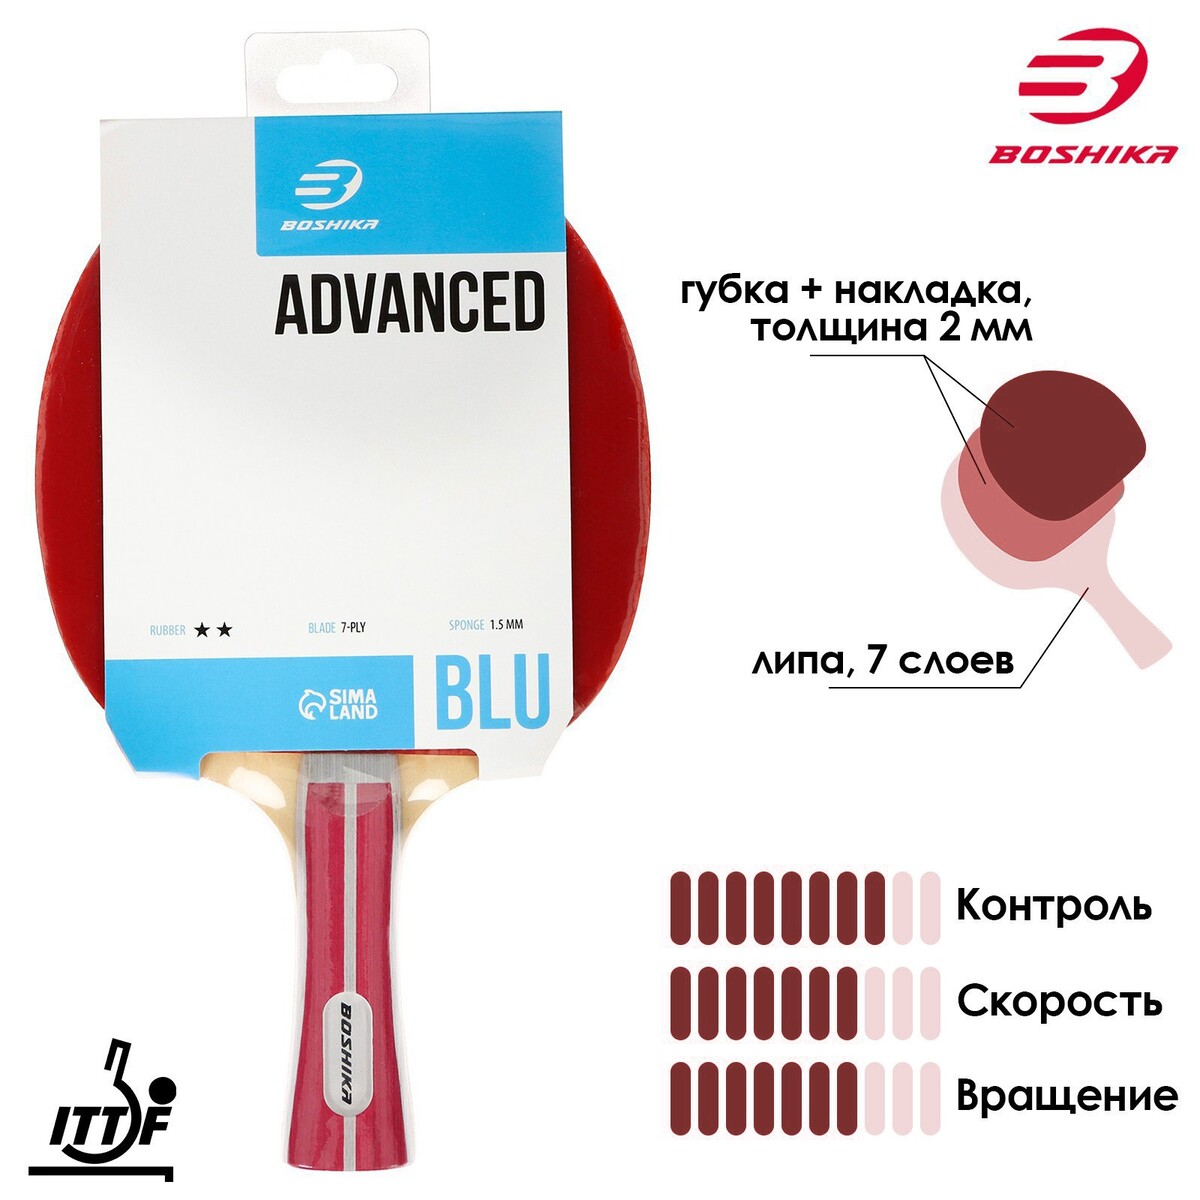 Ракетка для настольного тенниса boshika advanced 2*, для любителей, накладка double fish 815 1.5 мм, коническая ручка табло onlytop для баскетбола футбола настольного тенниса